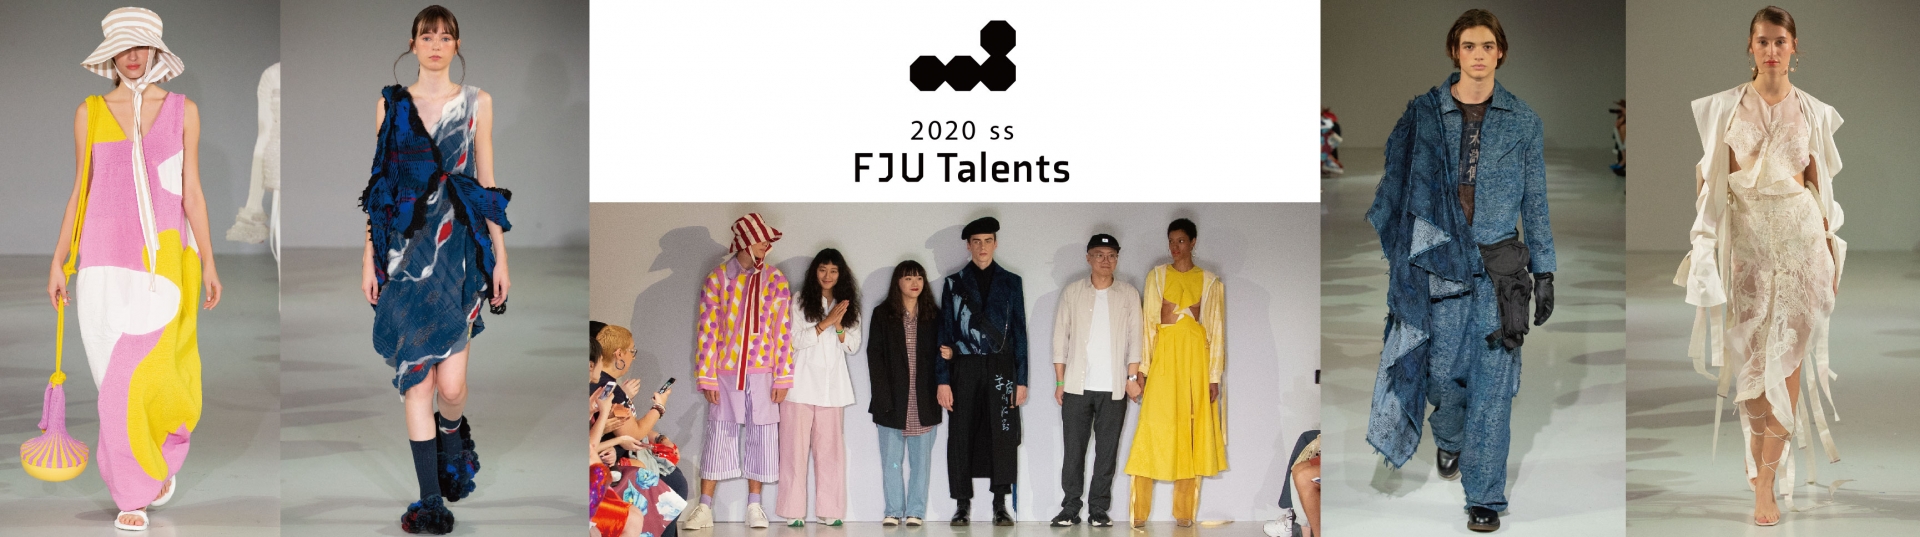 FJU Talents Spring/Summer 2020 in LFW